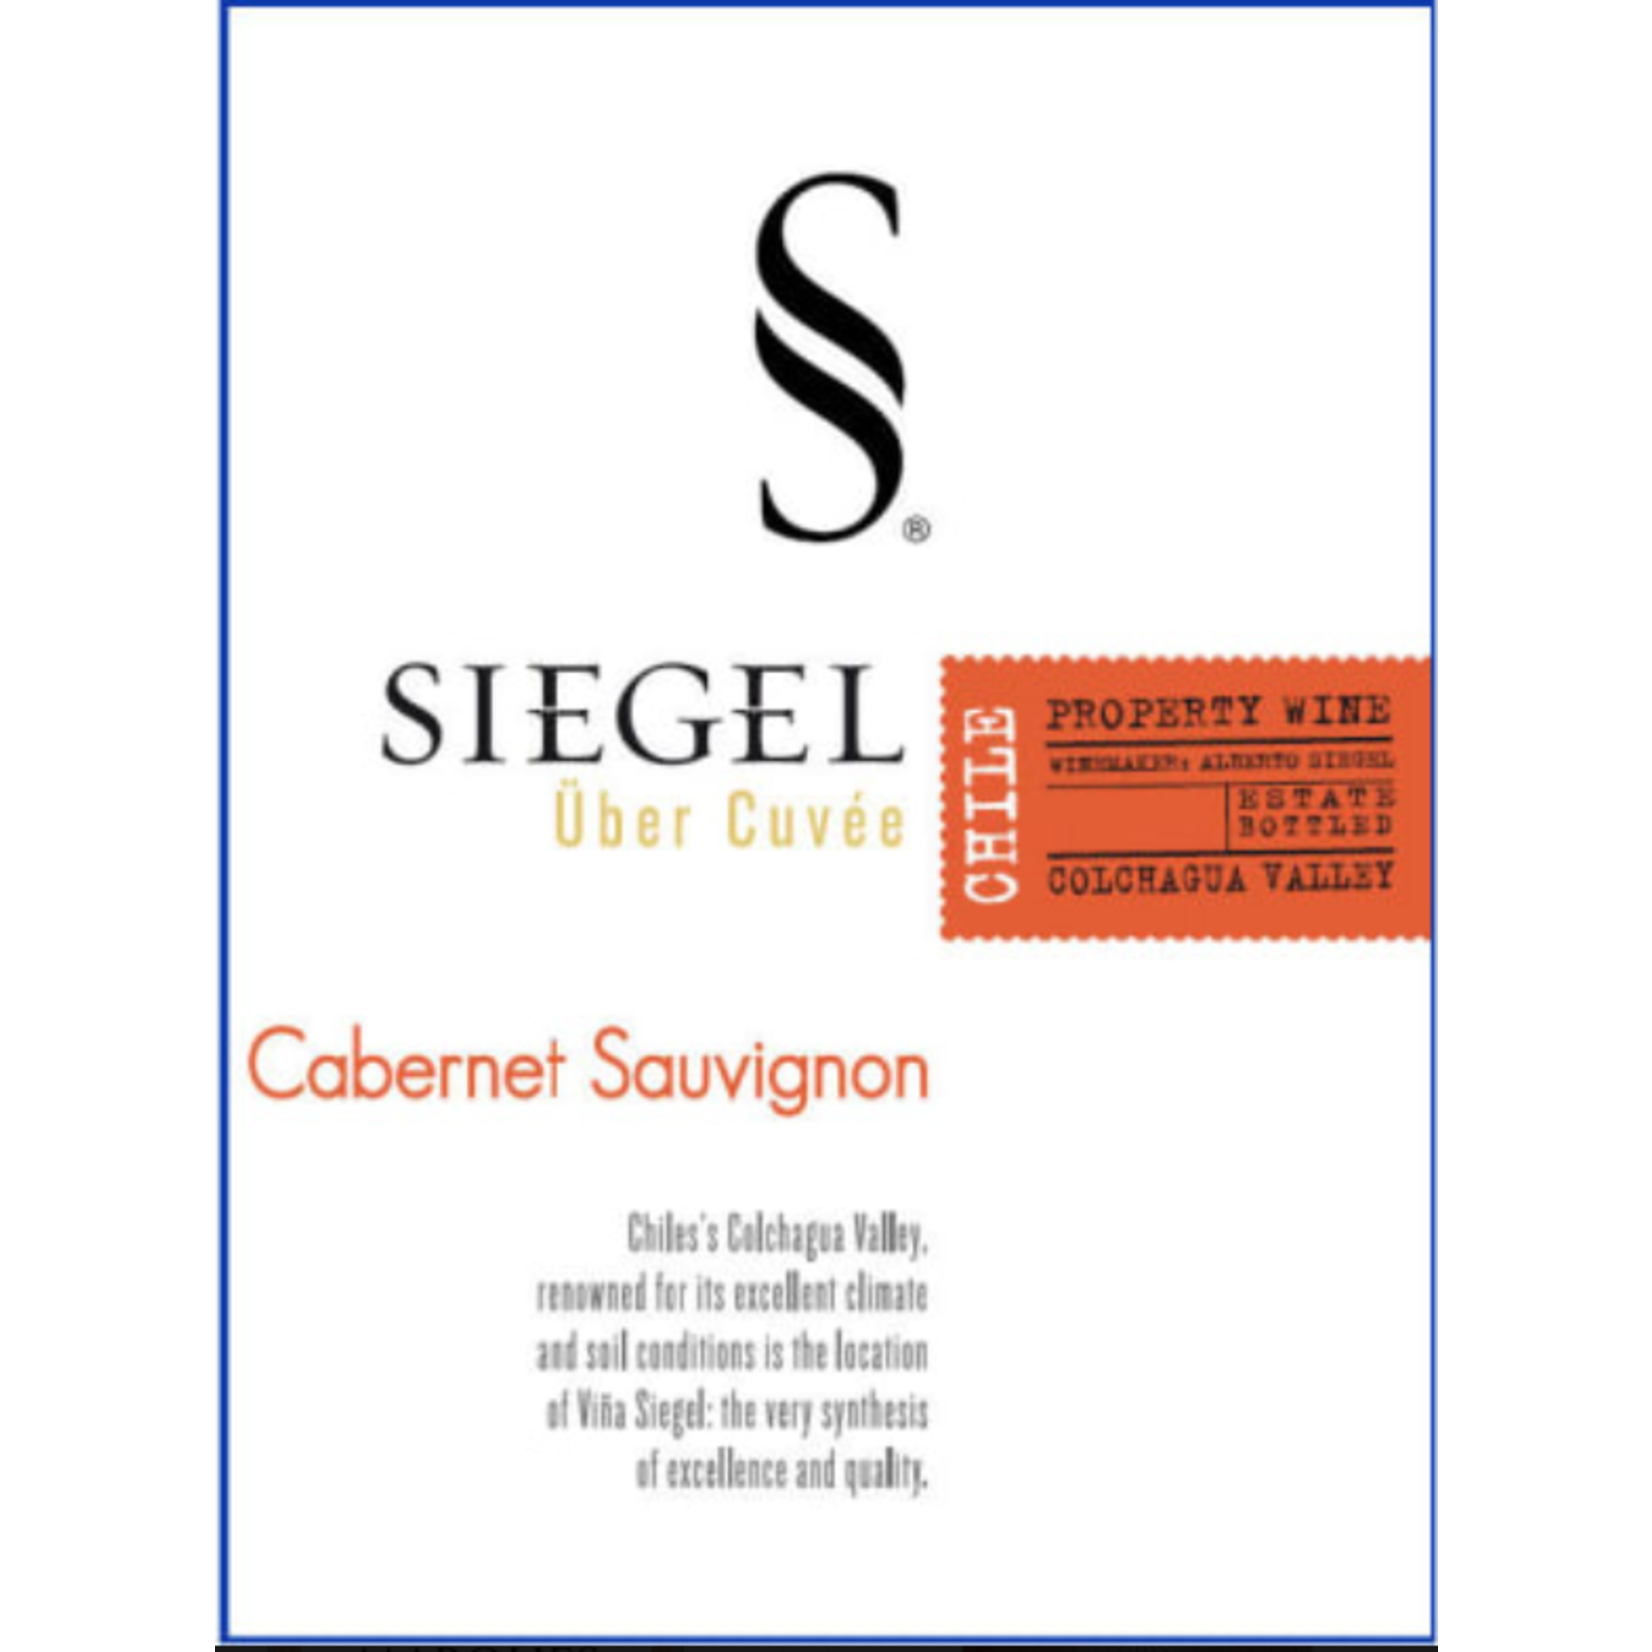 Siegel Wines Siegel Reserve Cabernet Sauvignon Reserve 2018 Colchagua Valley, Chile